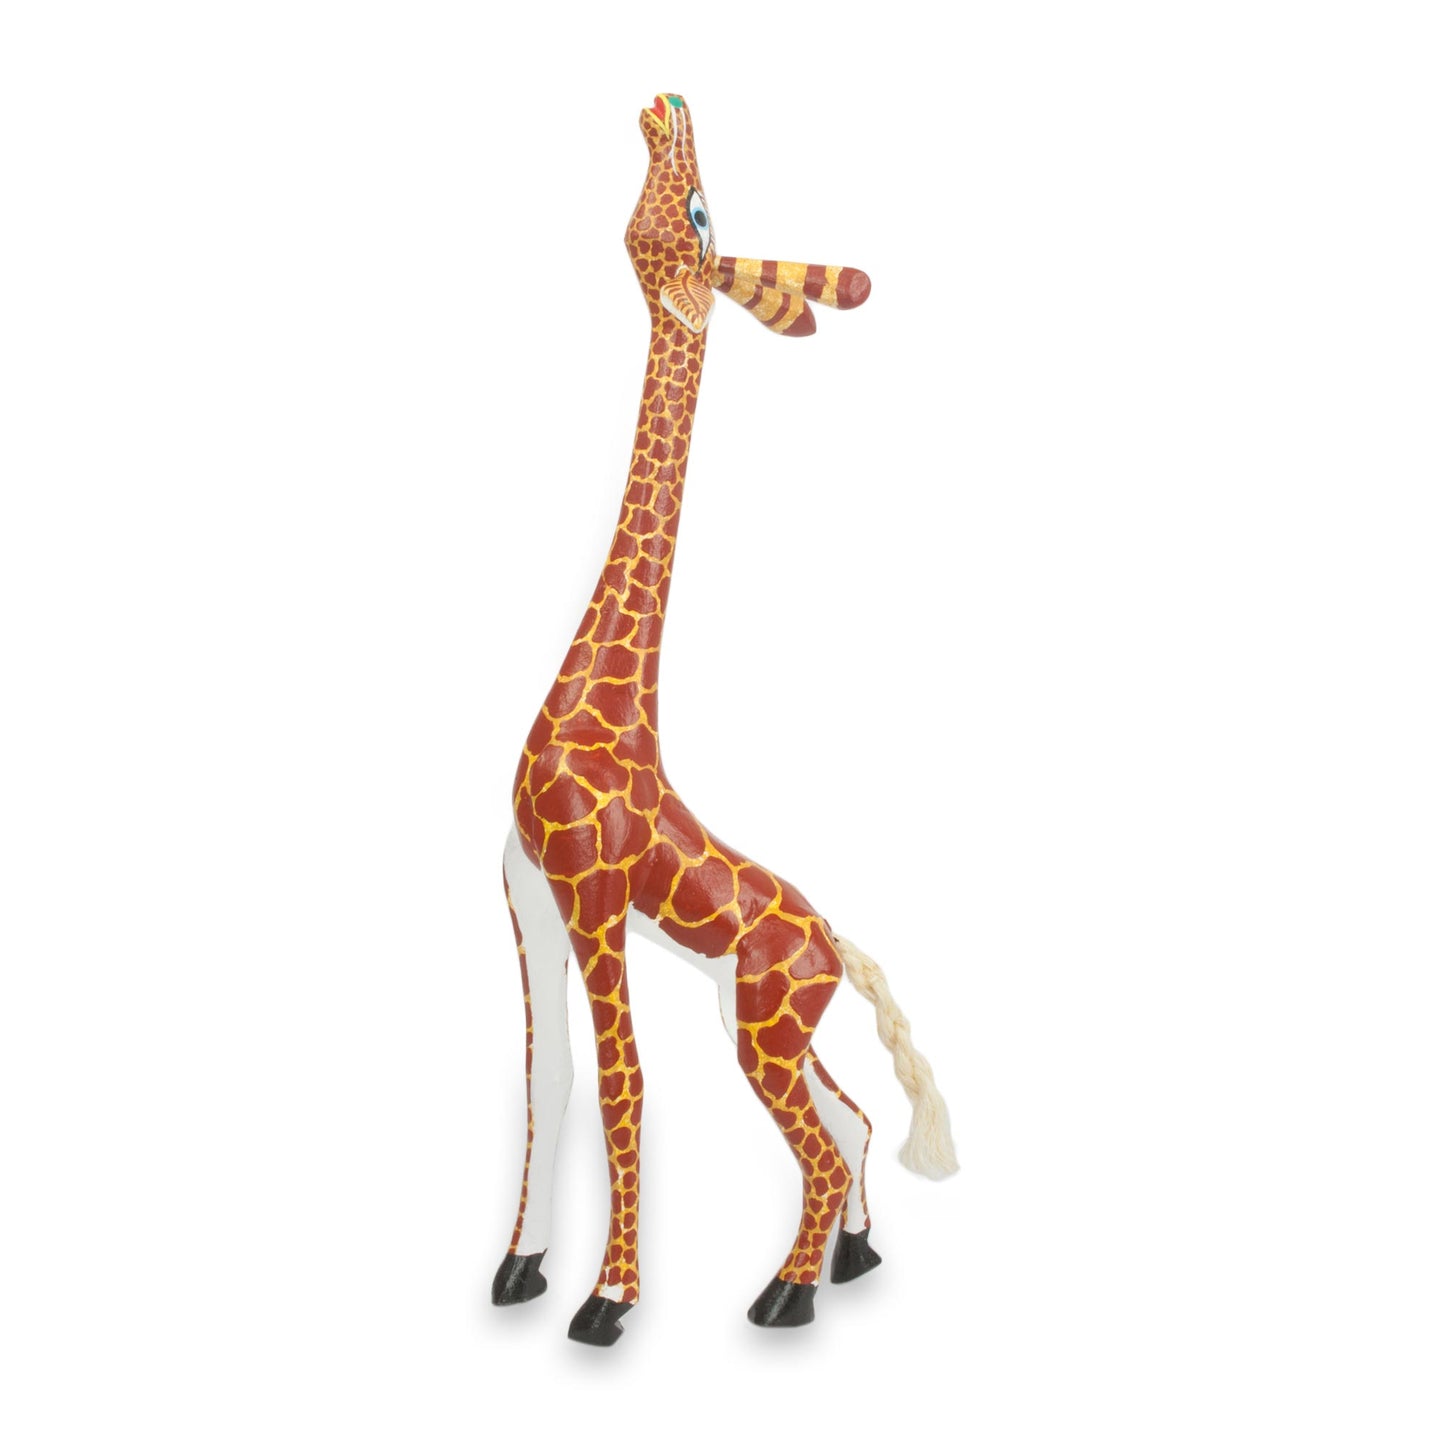 My Curious Giraffe Wood Giraffe Figurine Sculpture Artisan Crafted in Mexico